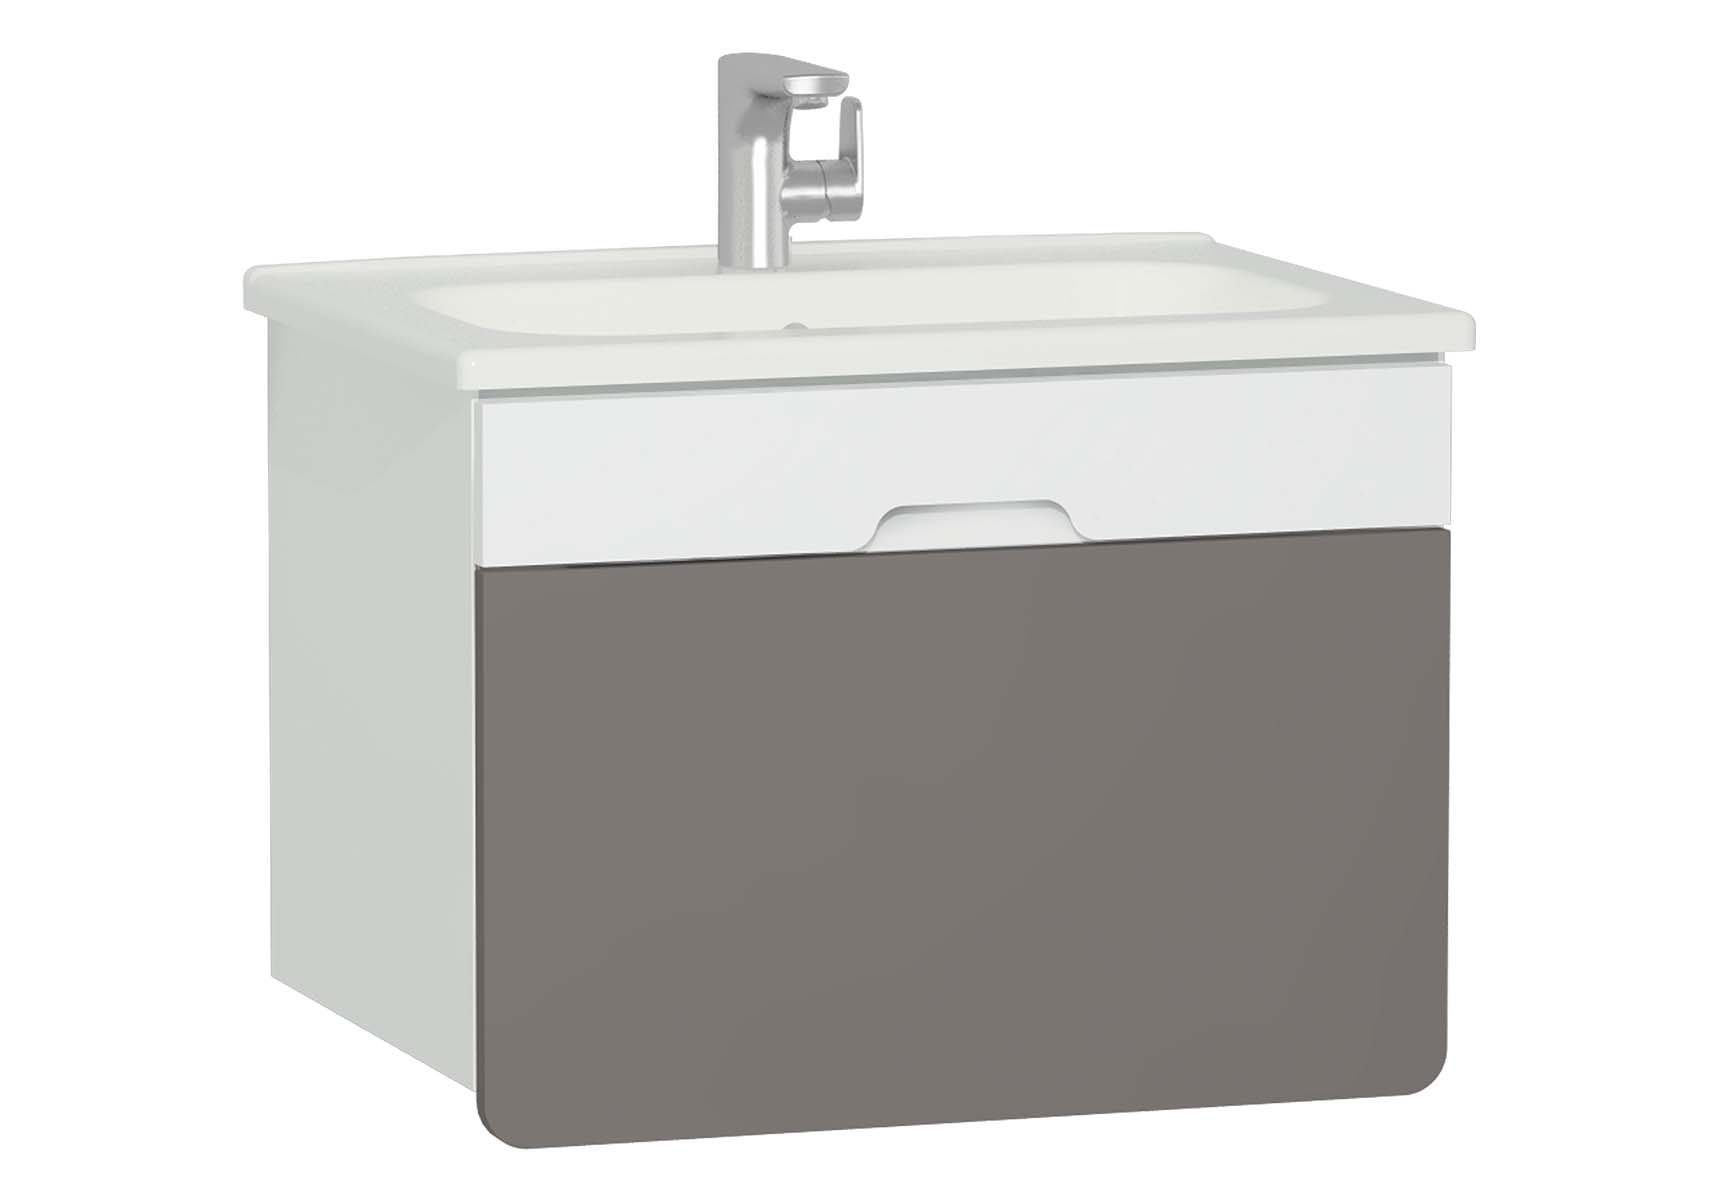 D-Light Washbasin Unit, 70 cm, Matte White & Mink